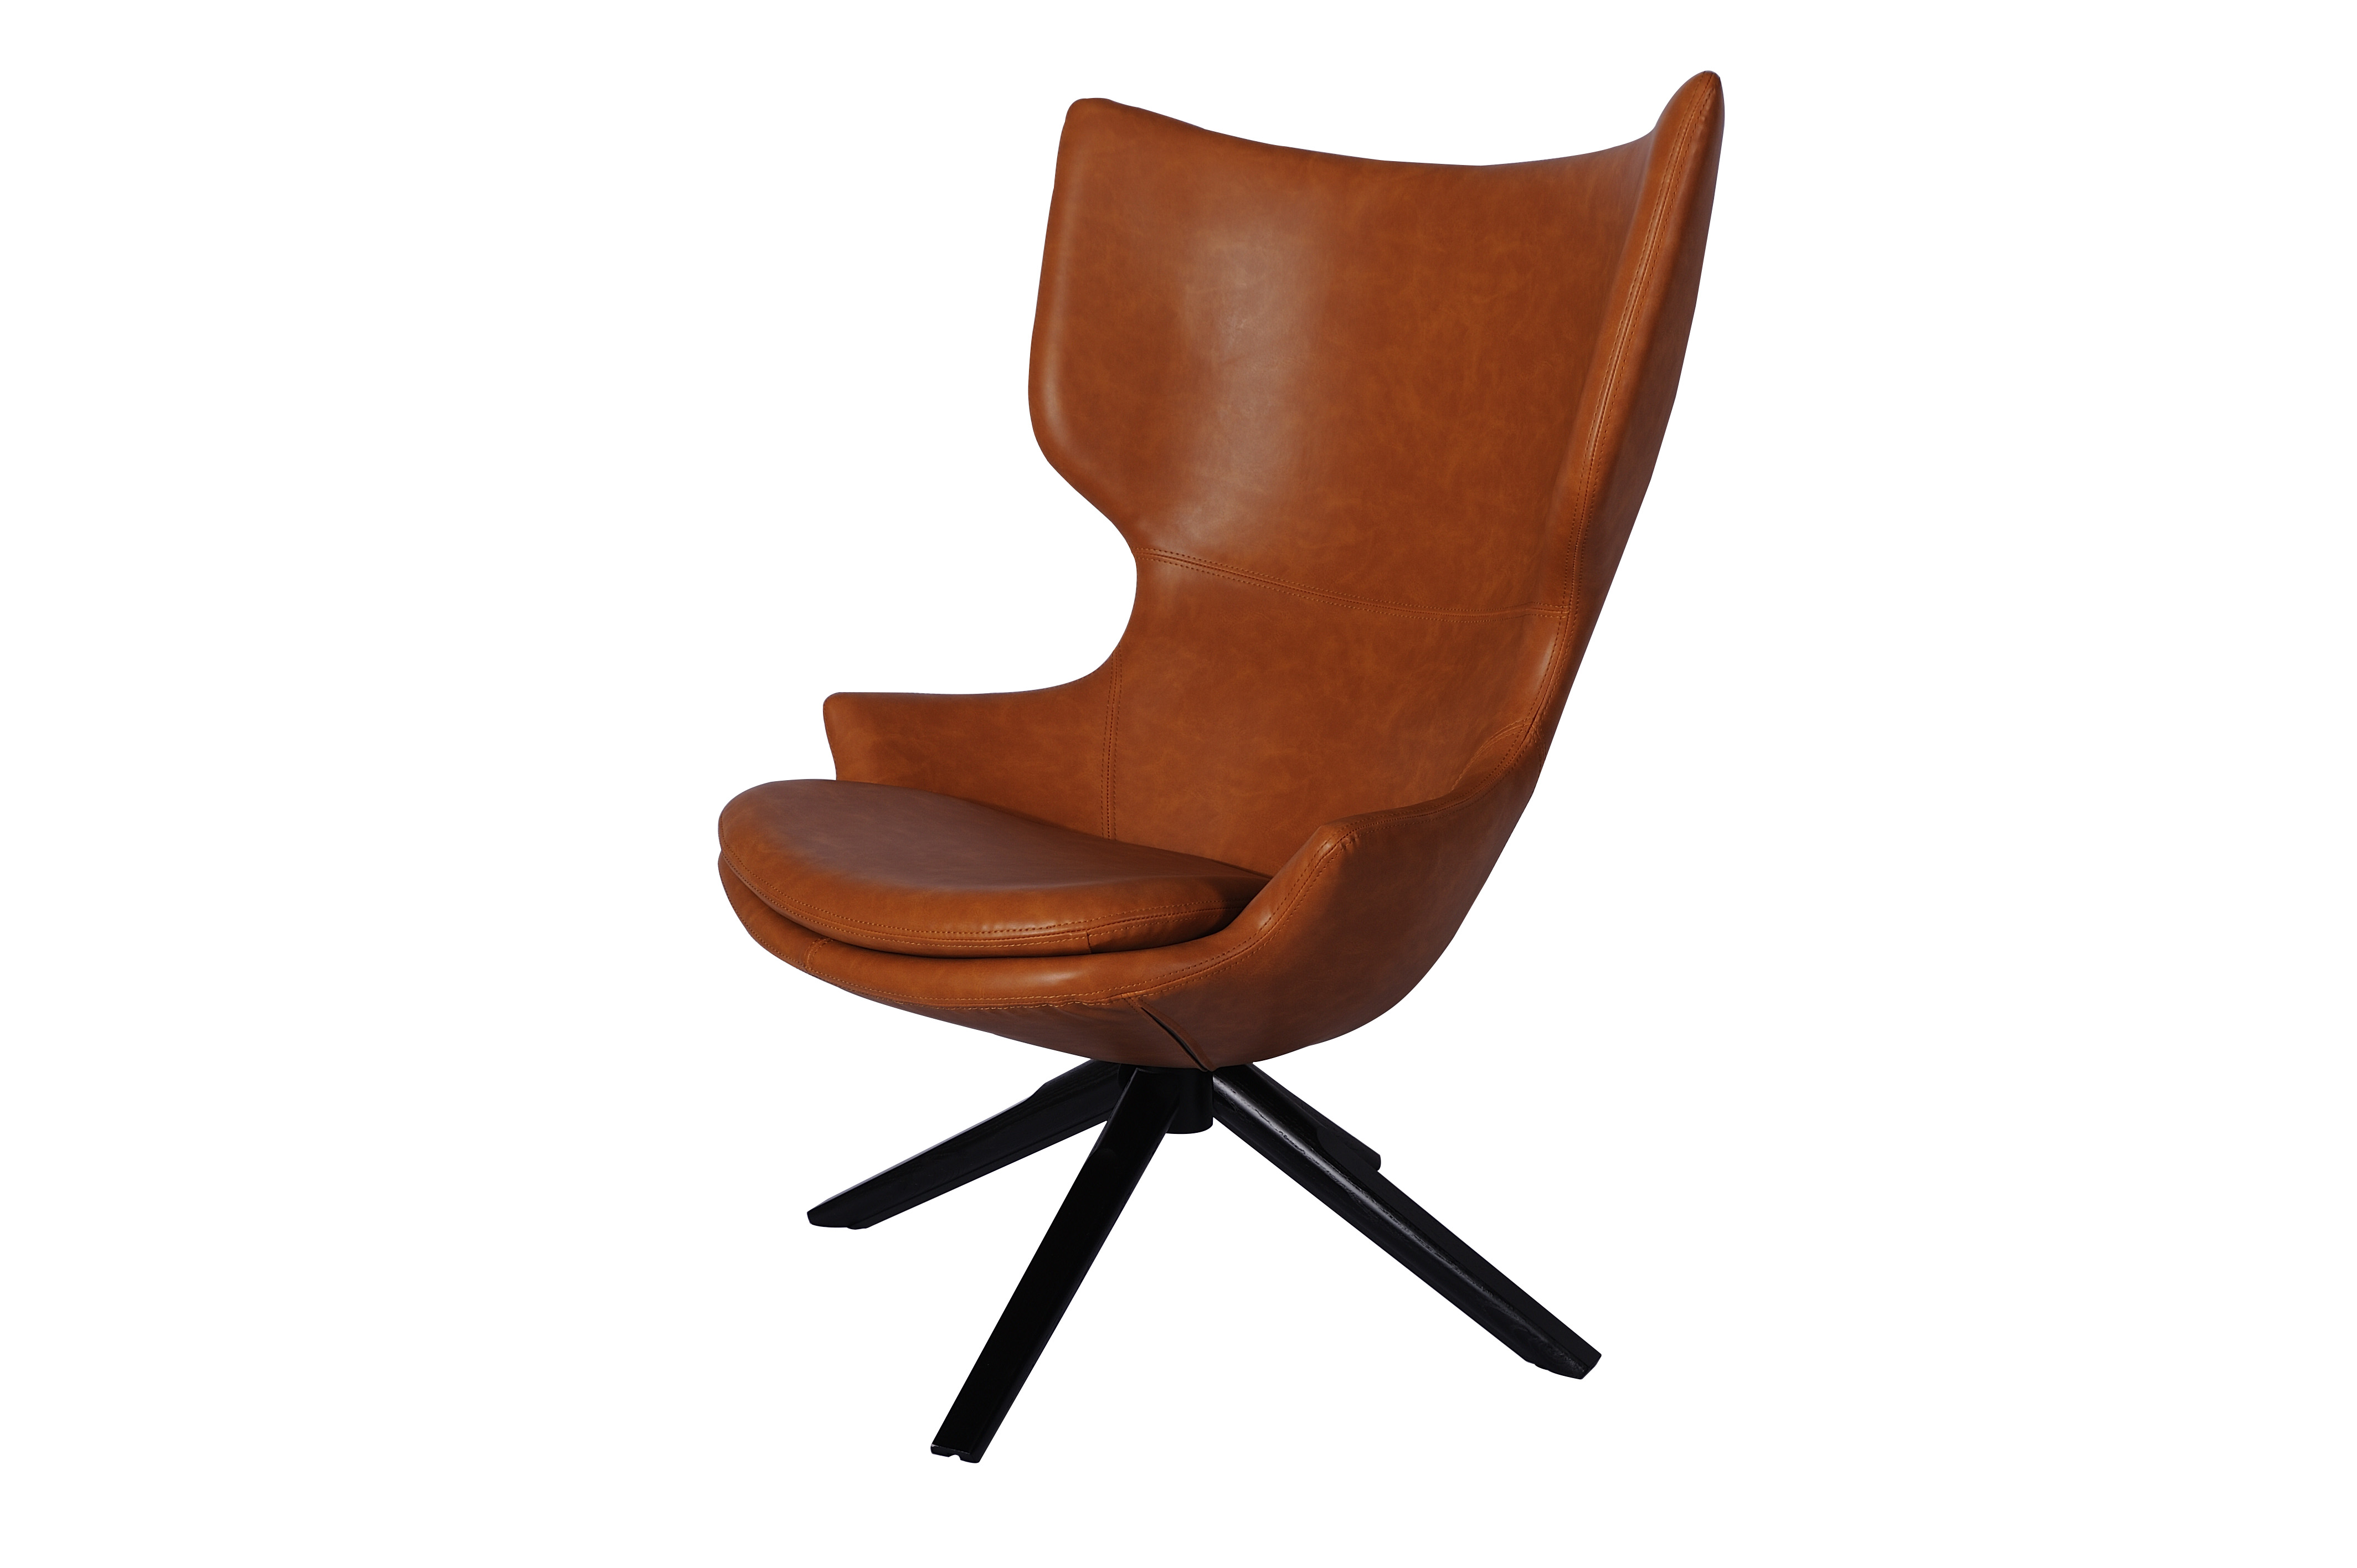 Tengye TENGYE new Nordic cowhide egg chair creative revolving sofa chair leisure chair DY-16